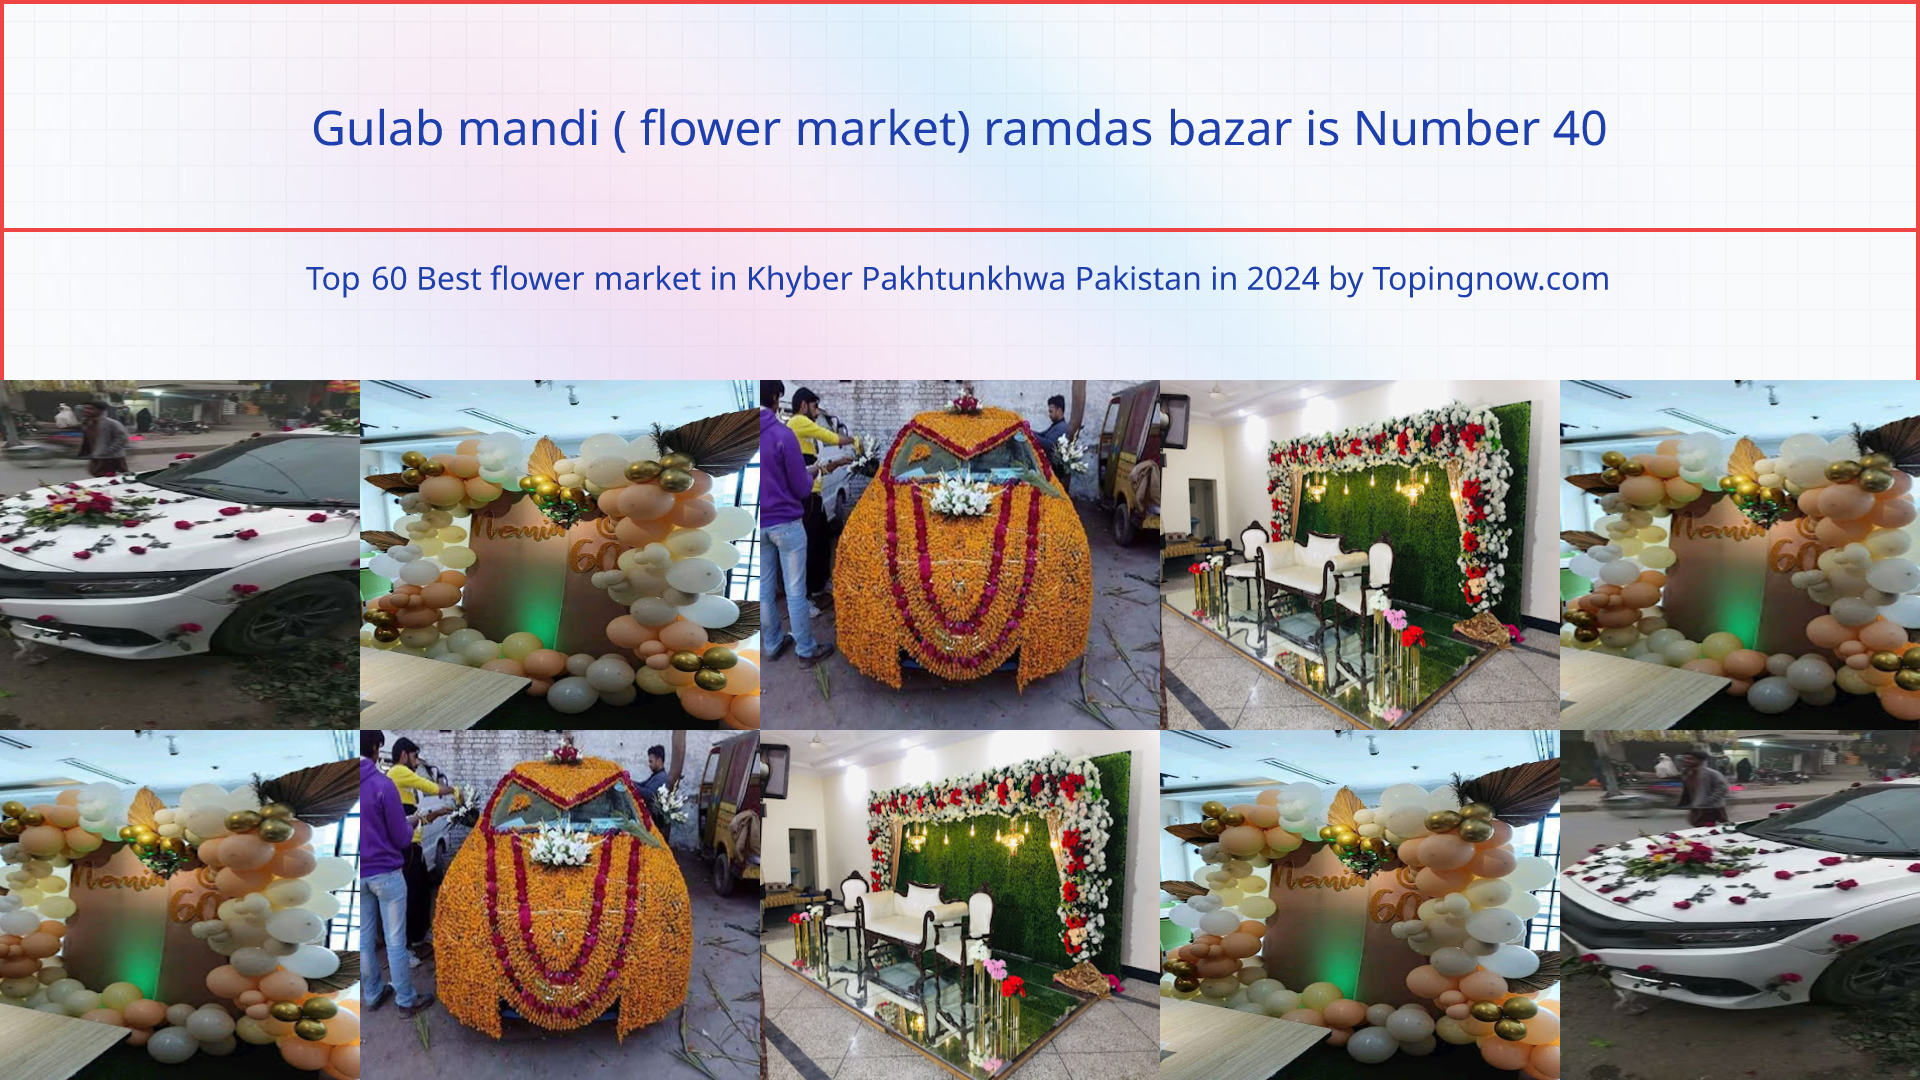 Gulab mandi ( flower market) ramdas bazar: Top 60 Best flower market in Khyber Pakhtunkhwa Pakistan in 2024